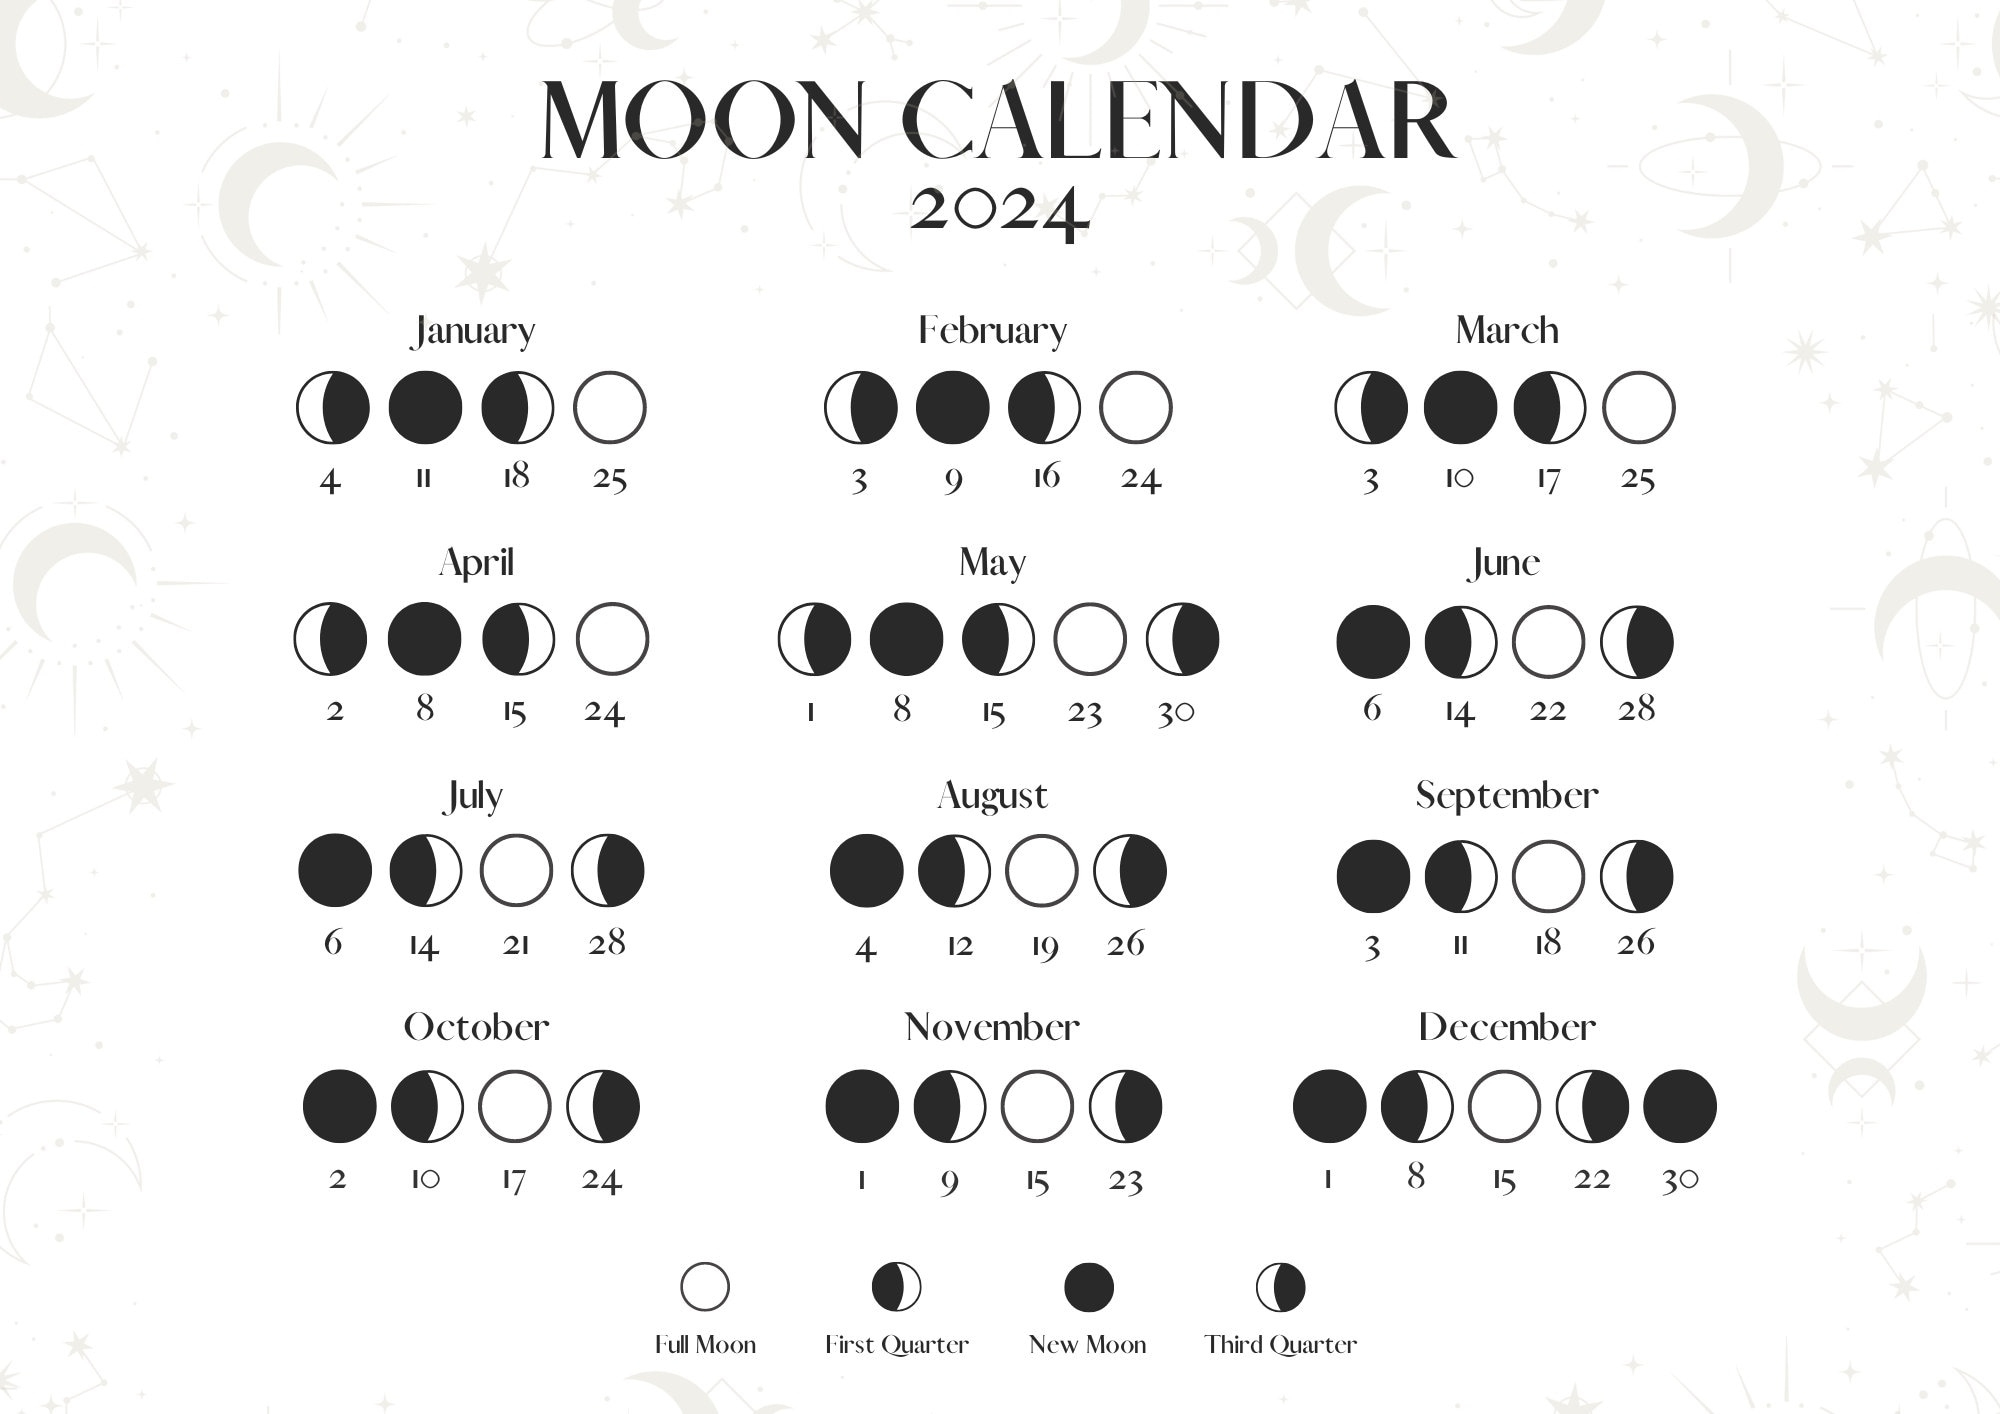 Moon Calendar 2024 Moon Phases Lunar Calendar Printable In A4 Size | Printable Lunar Calendar 2024